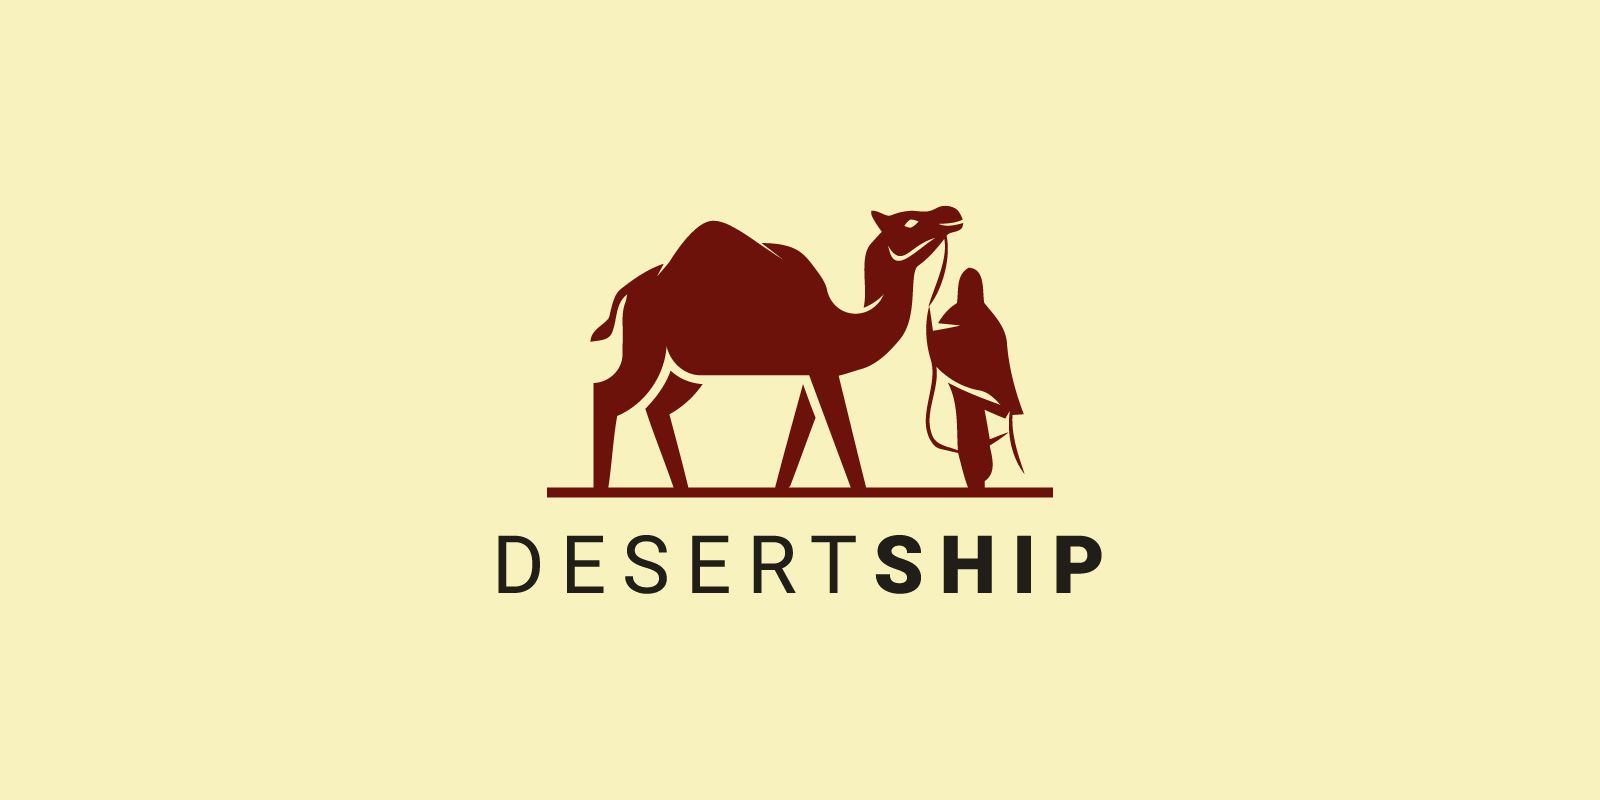 Camel Desert Ship Animal Logo by Farahnaveed | Codester